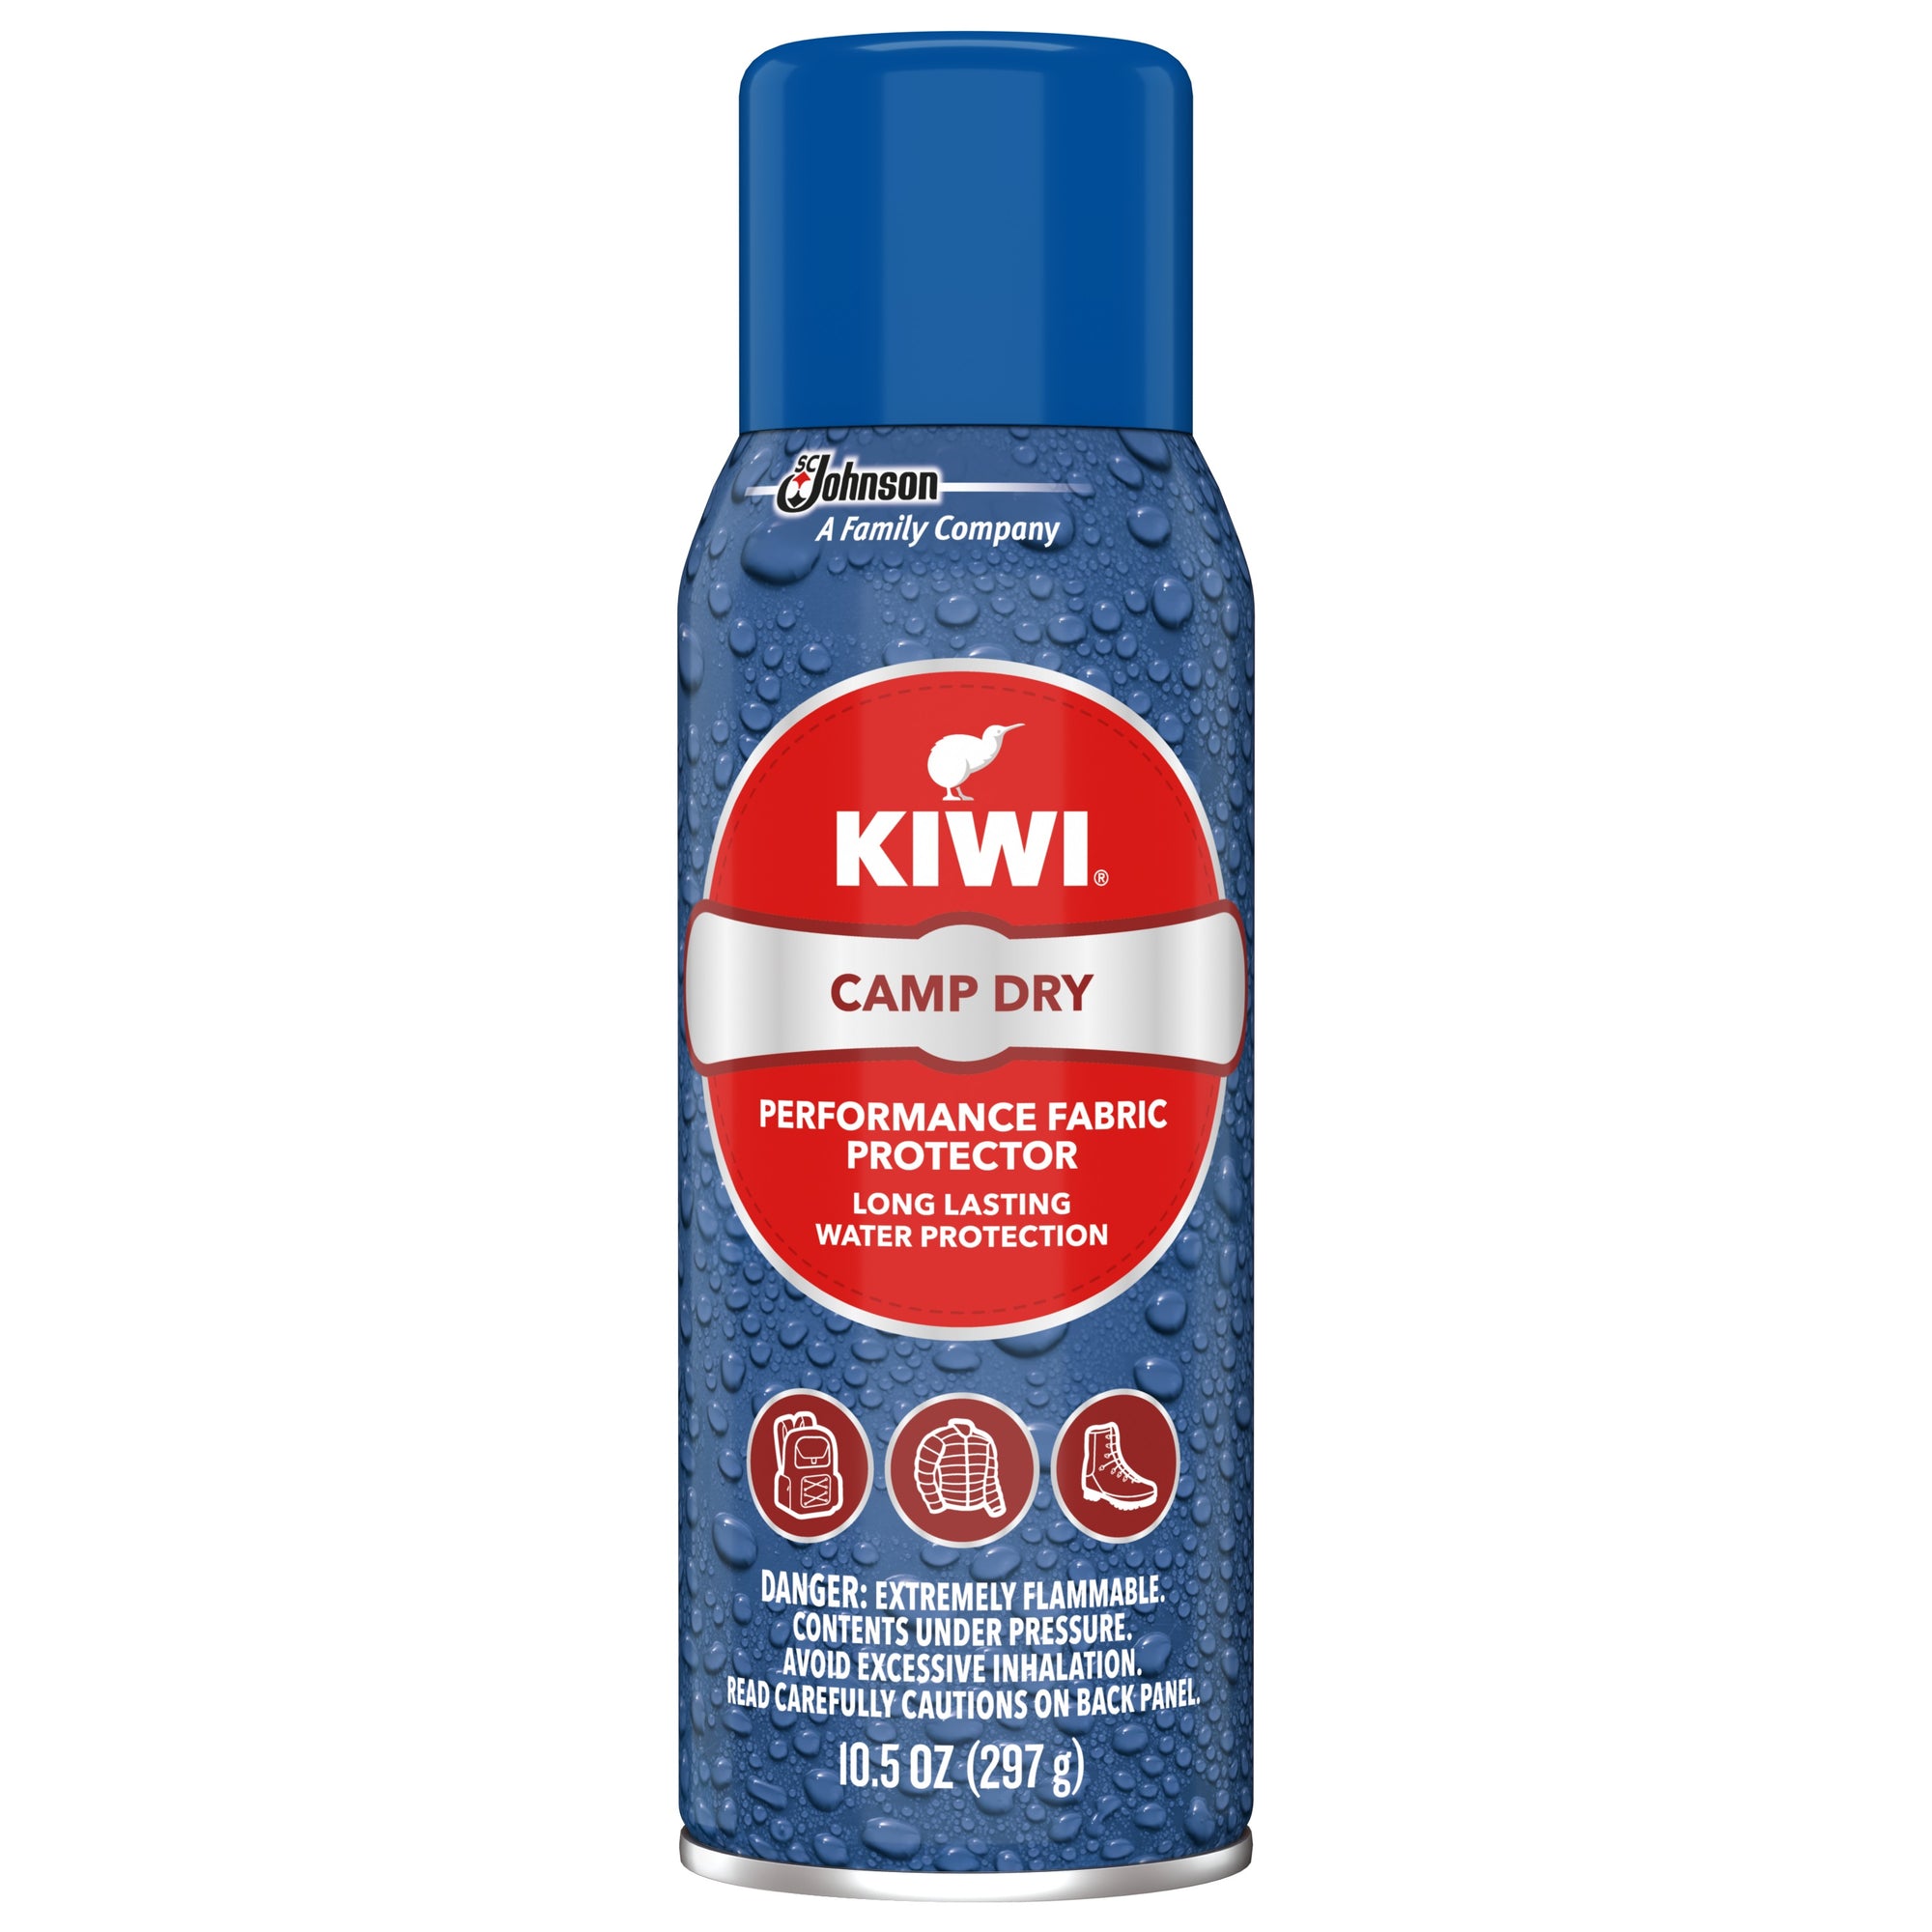 KIWI CAMP DRY FABRIC PROTECTOR 10.5 OZ. - BLUE CAN